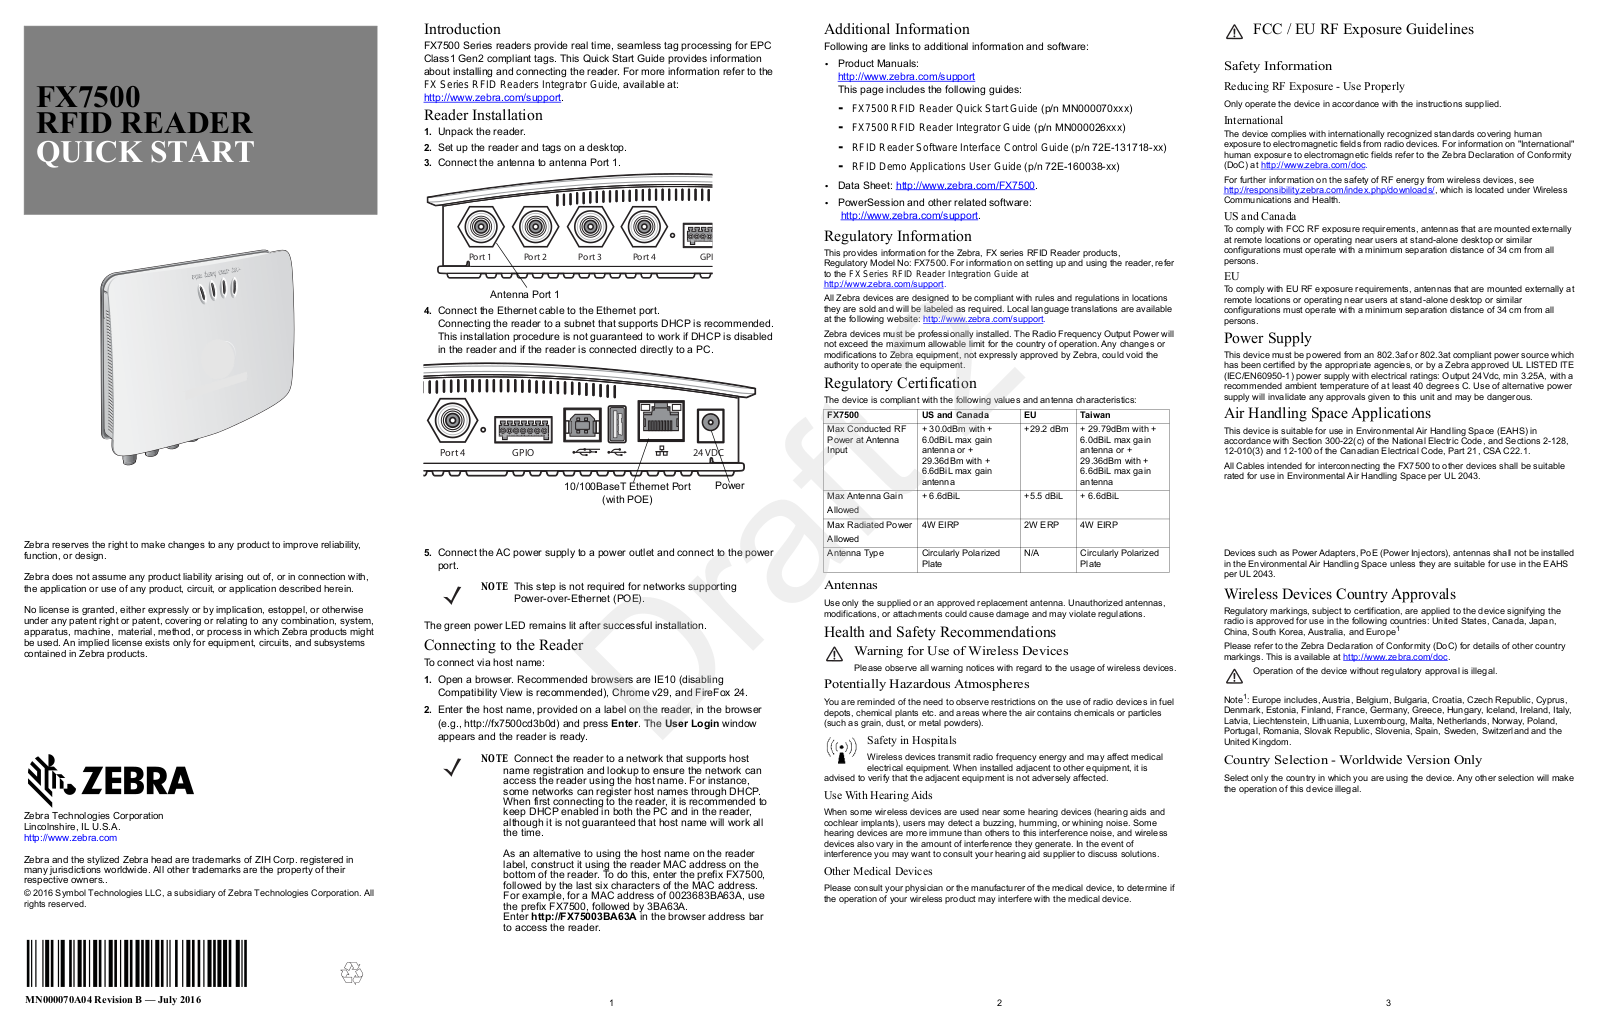 Zebra Technologies FX7500 User Manual